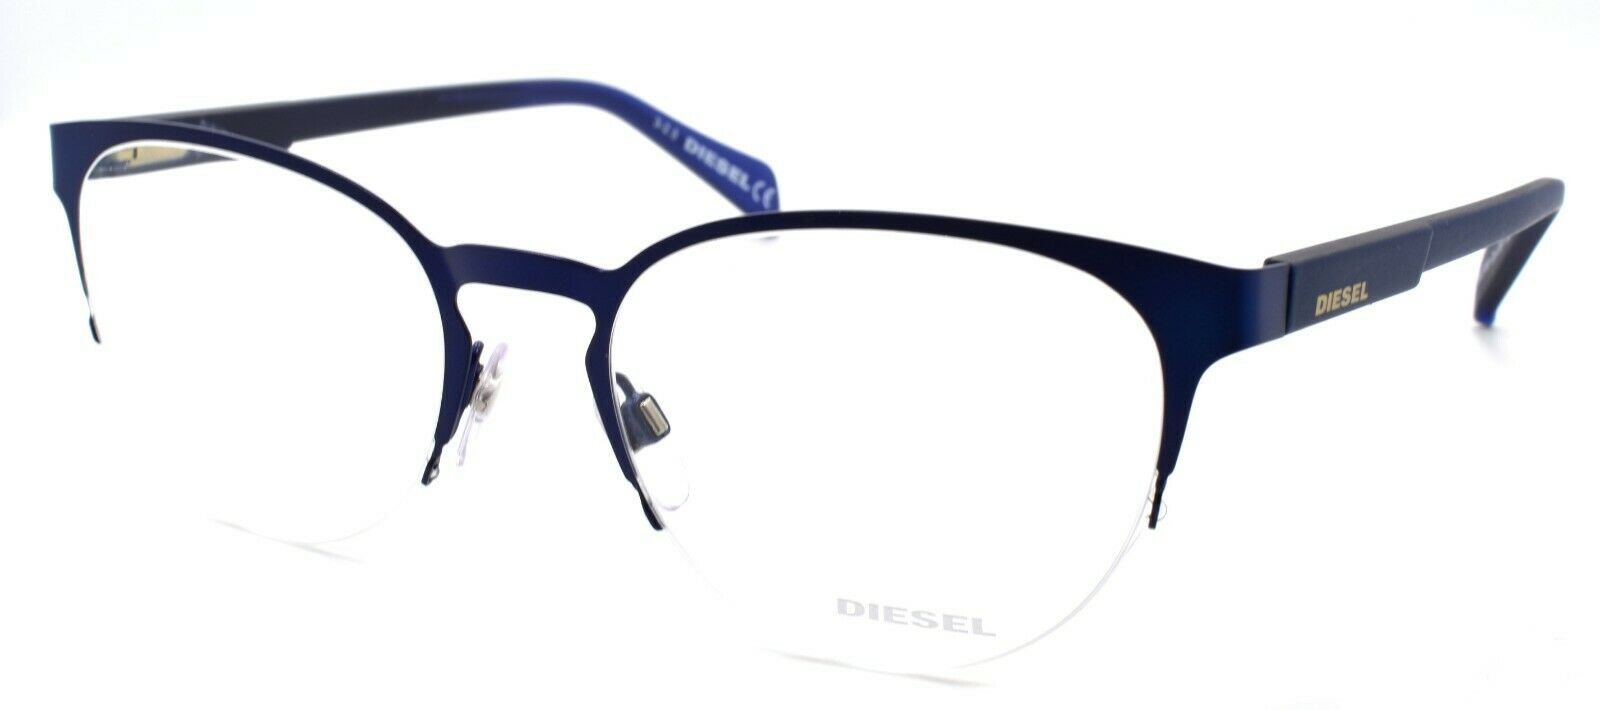 1-Diesel DL5158 091 Unisex Eyeglasses Frames Half Rim 52-19-145 Matte Blue-664689708048-IKSpecs